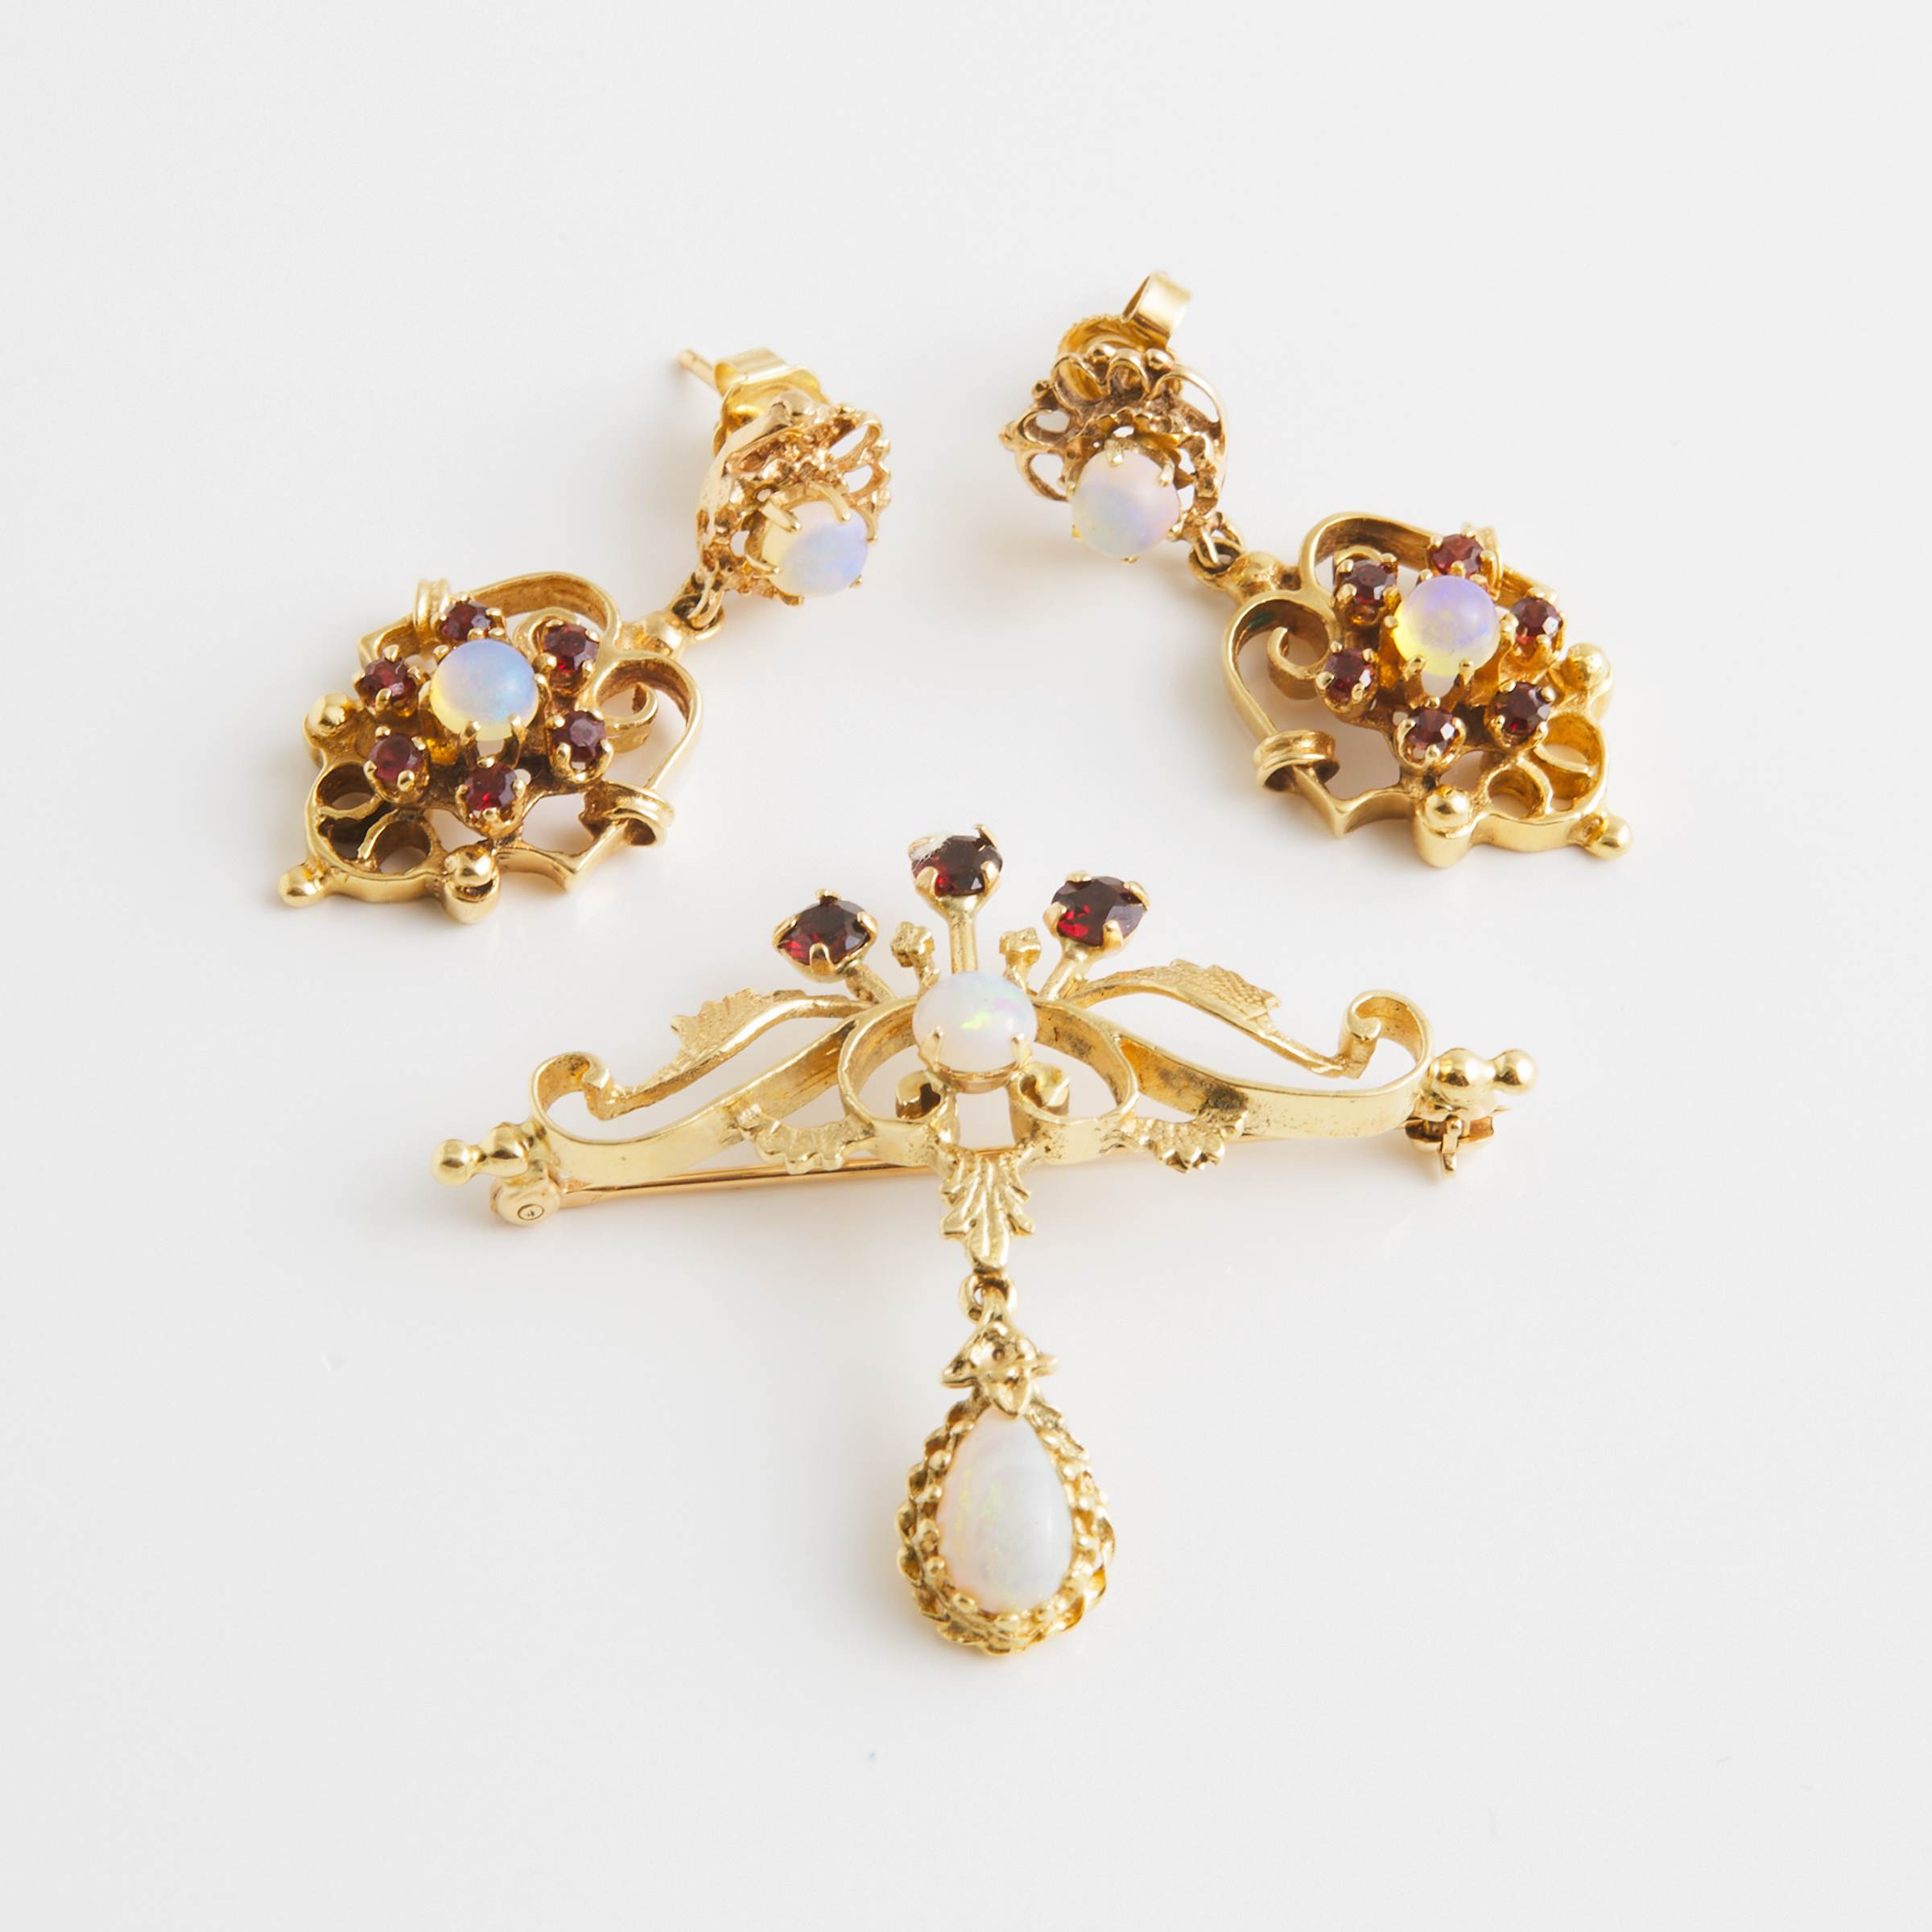 Small Quantity Of 14k Yellow Gold Filigree Jewellery